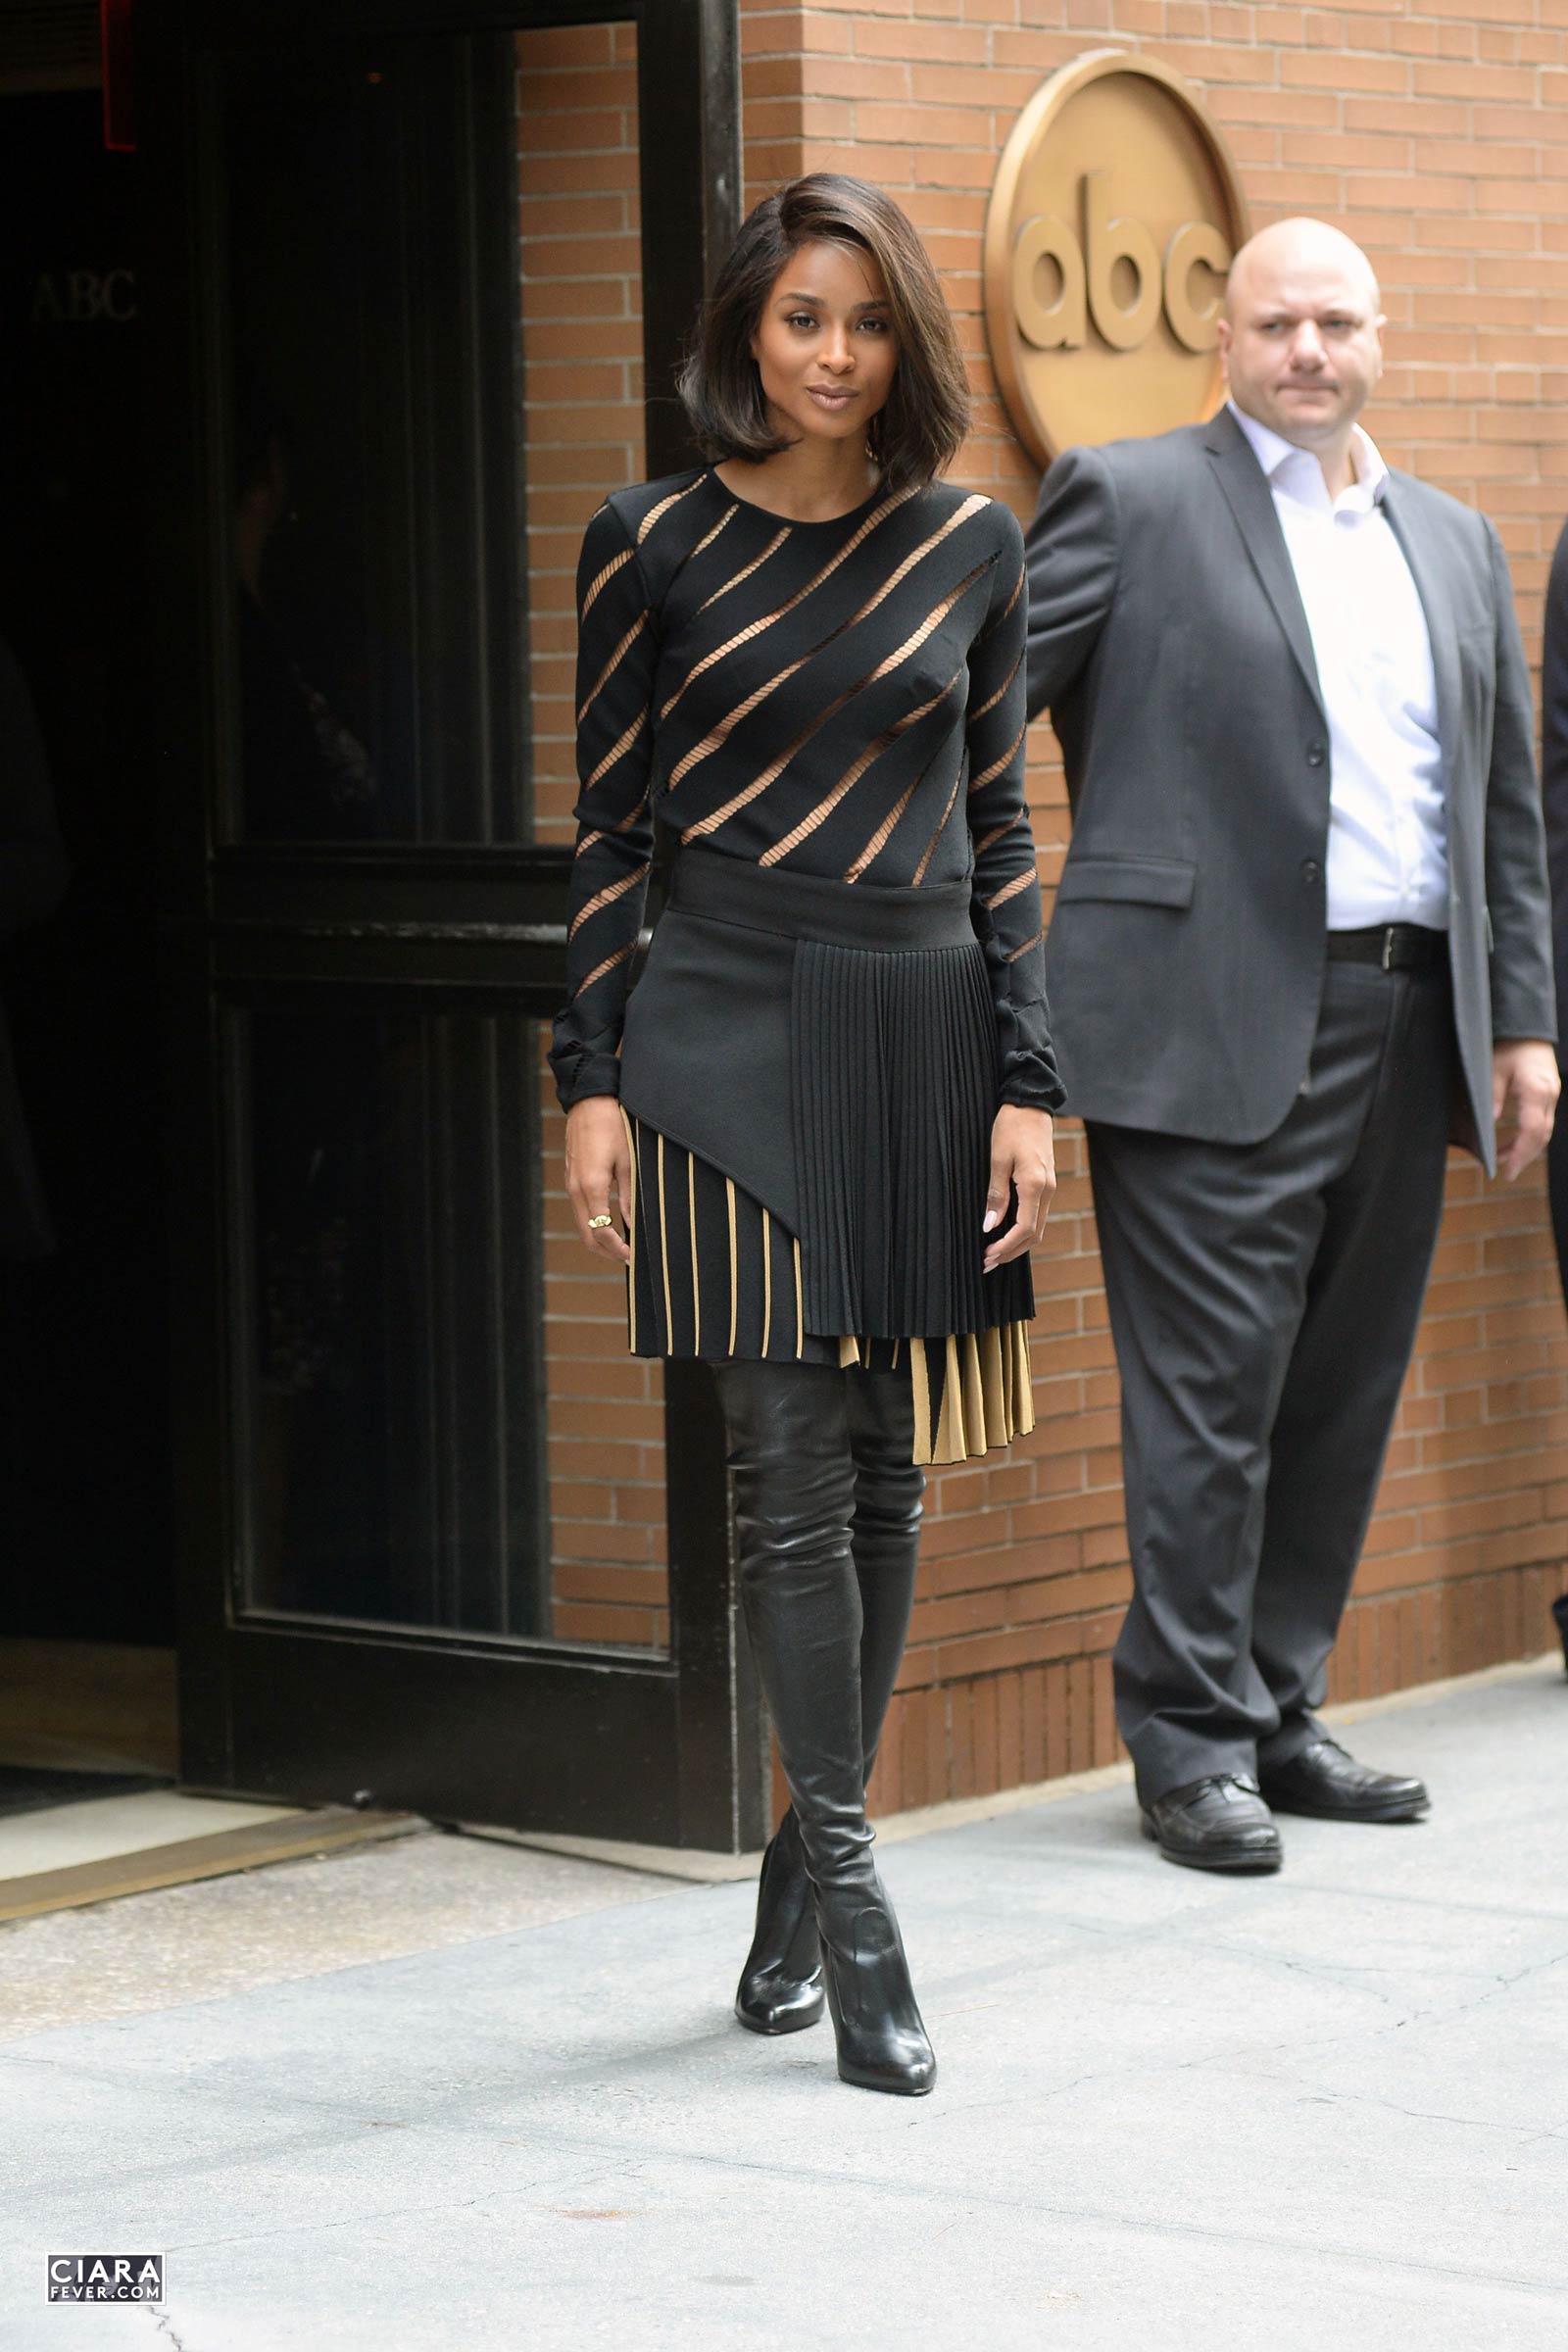 Ciara arriving at the ABC Studios